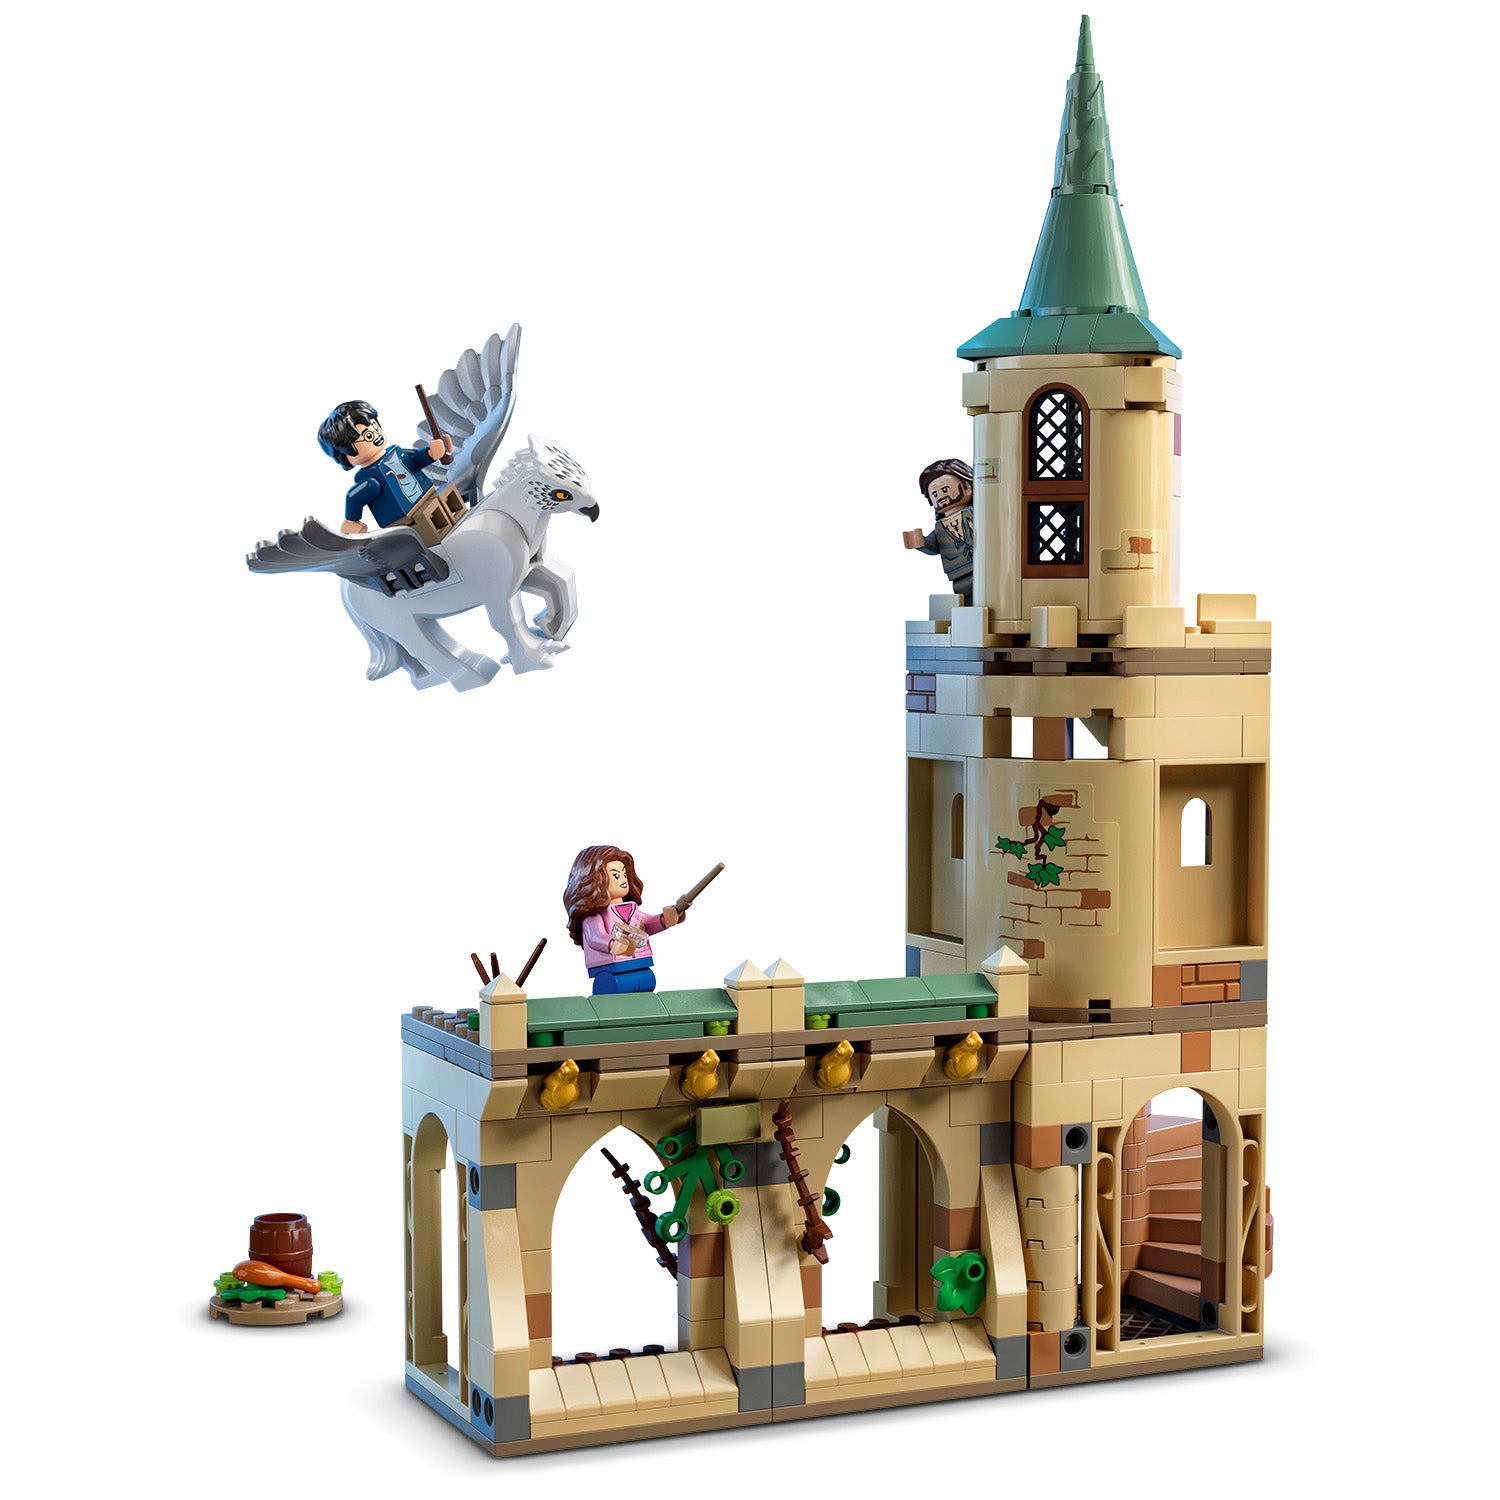 Lego 76401 Harry Potter Courtyard Sirius